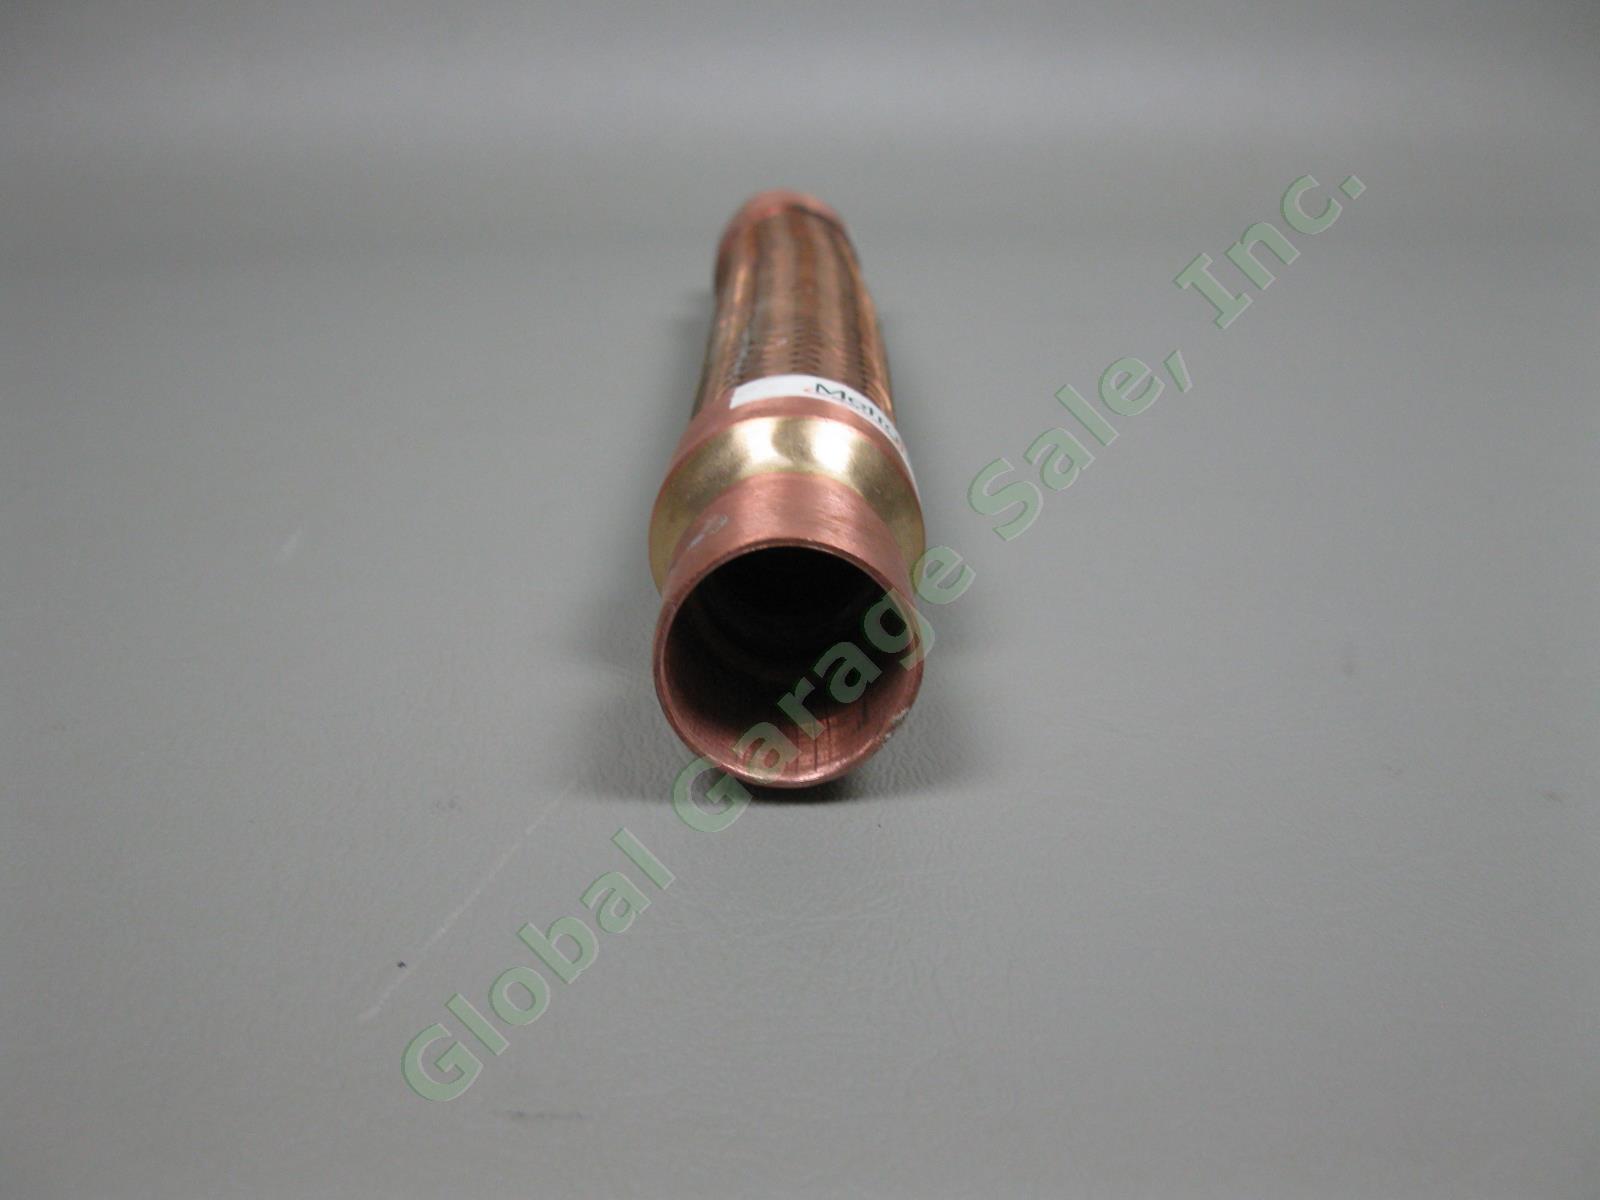 2 Metraflex 10" Copper Flex BBCT Bronze-Braid Connector 3/4" Sweat Ends Pipe LF 2